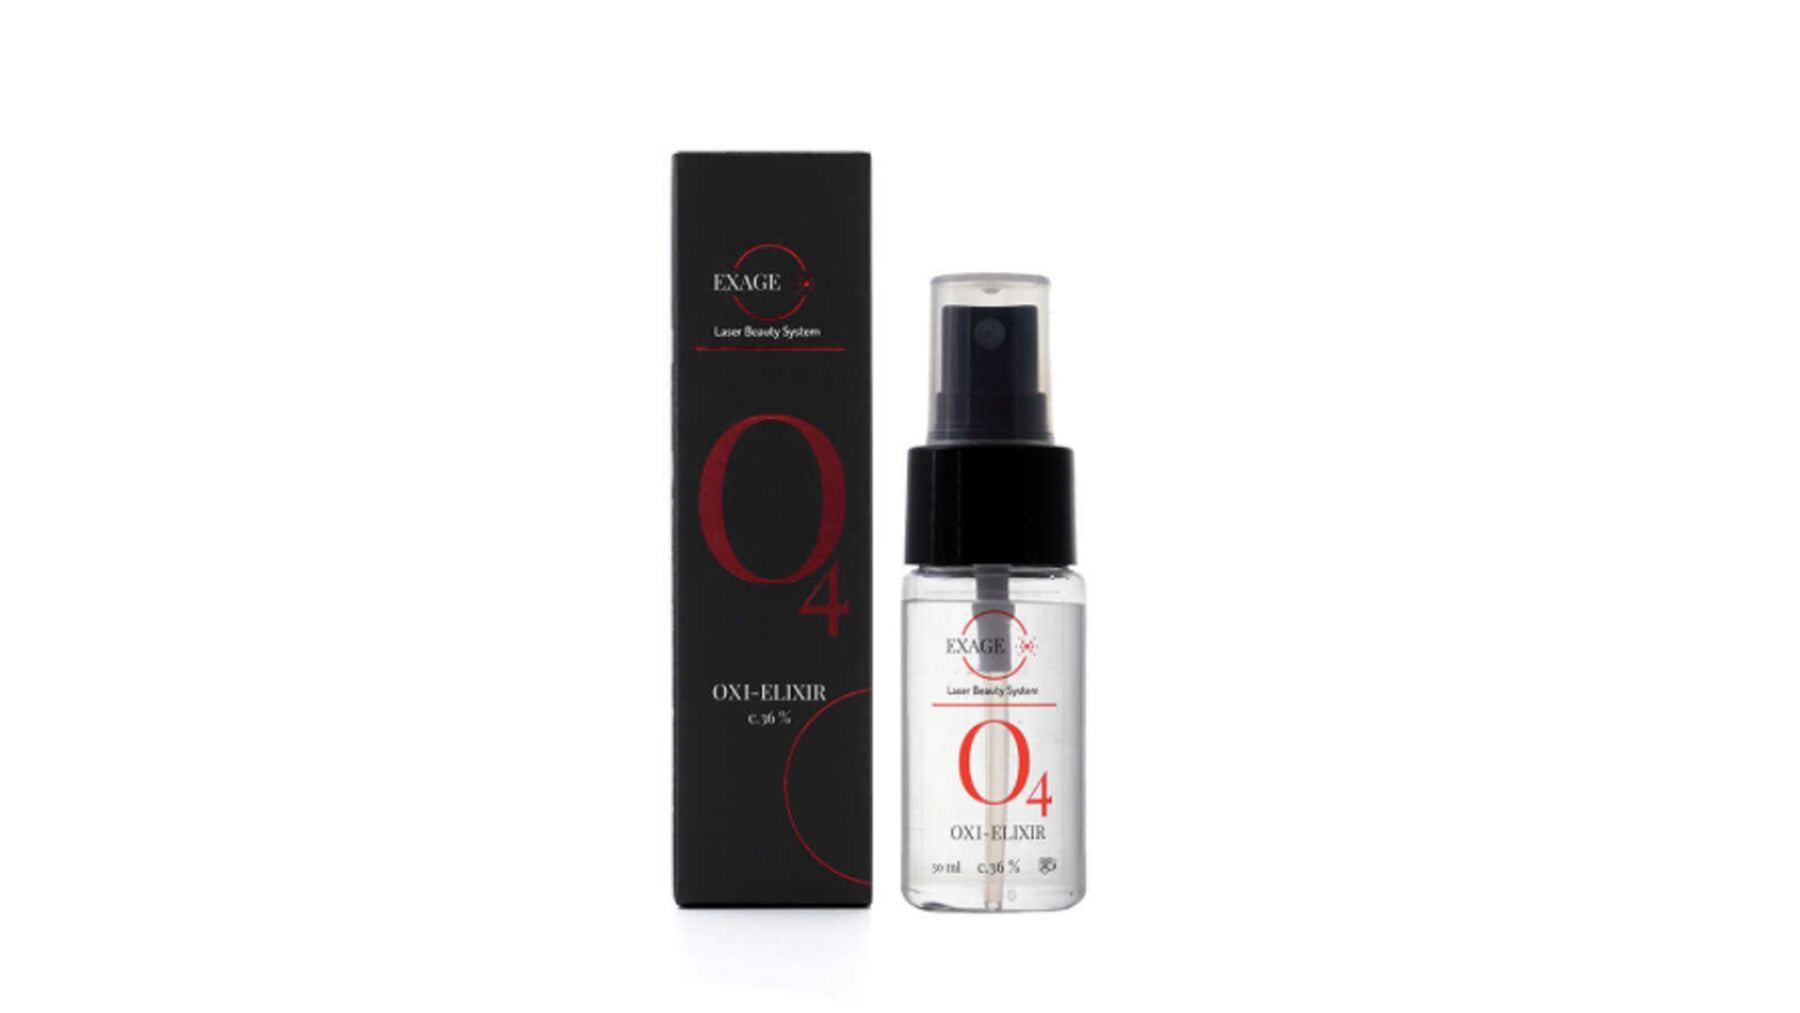 EXAGE O4 - Oxi Elixir (mist)